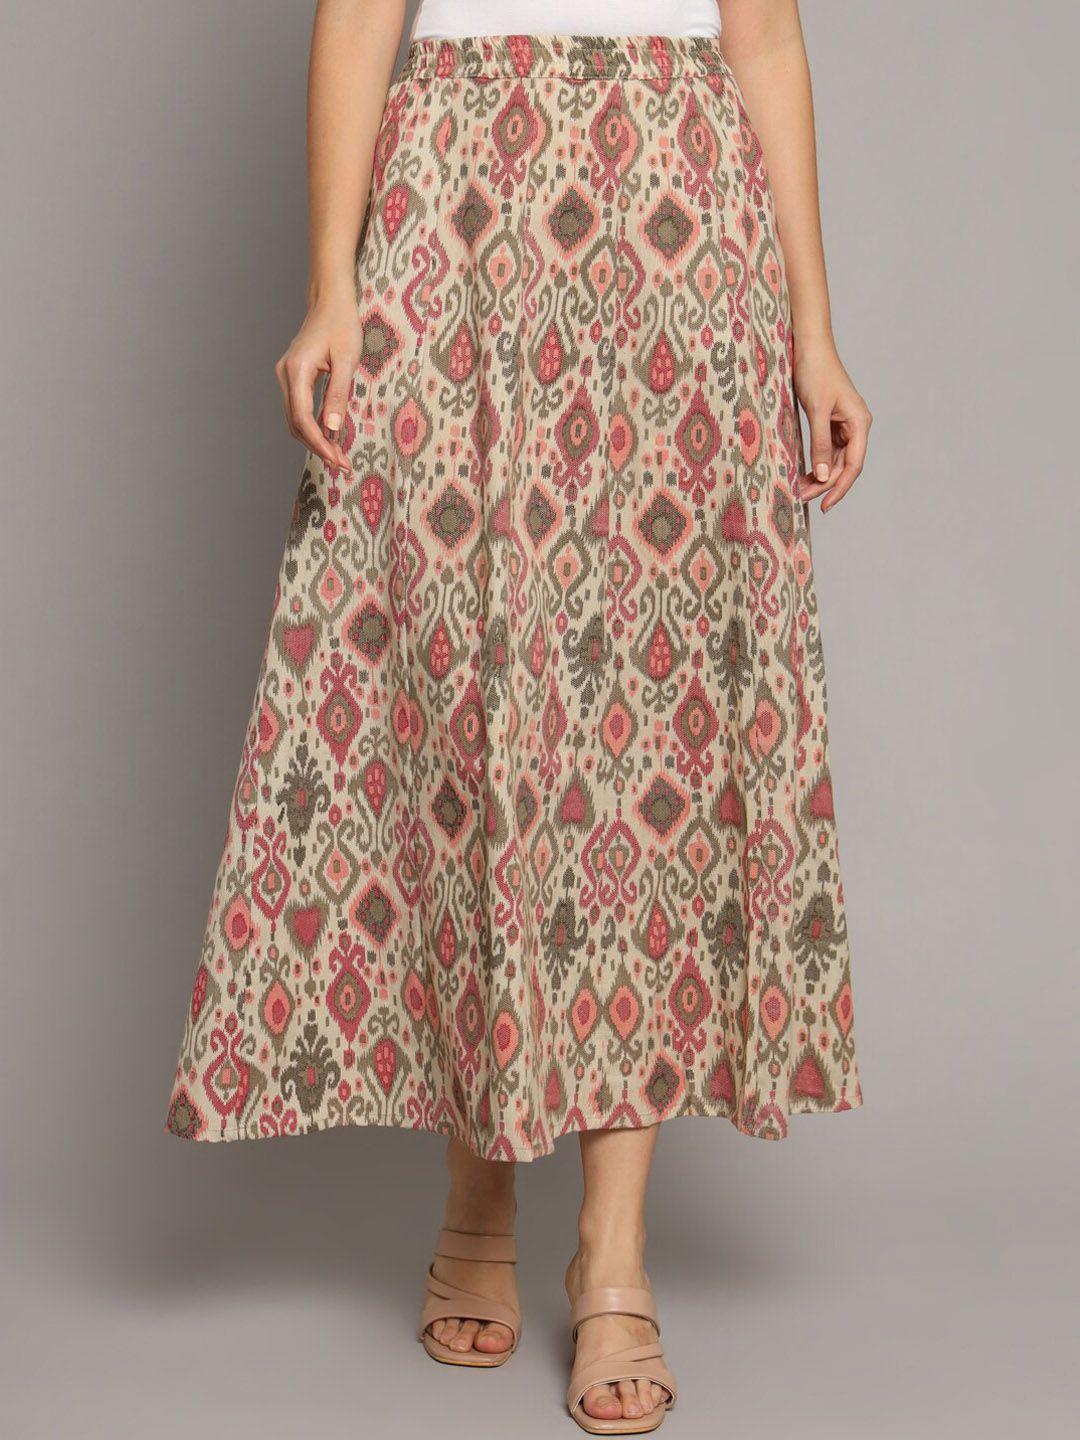 deckedup ethnic motifs printed pure cotton a-line skirts